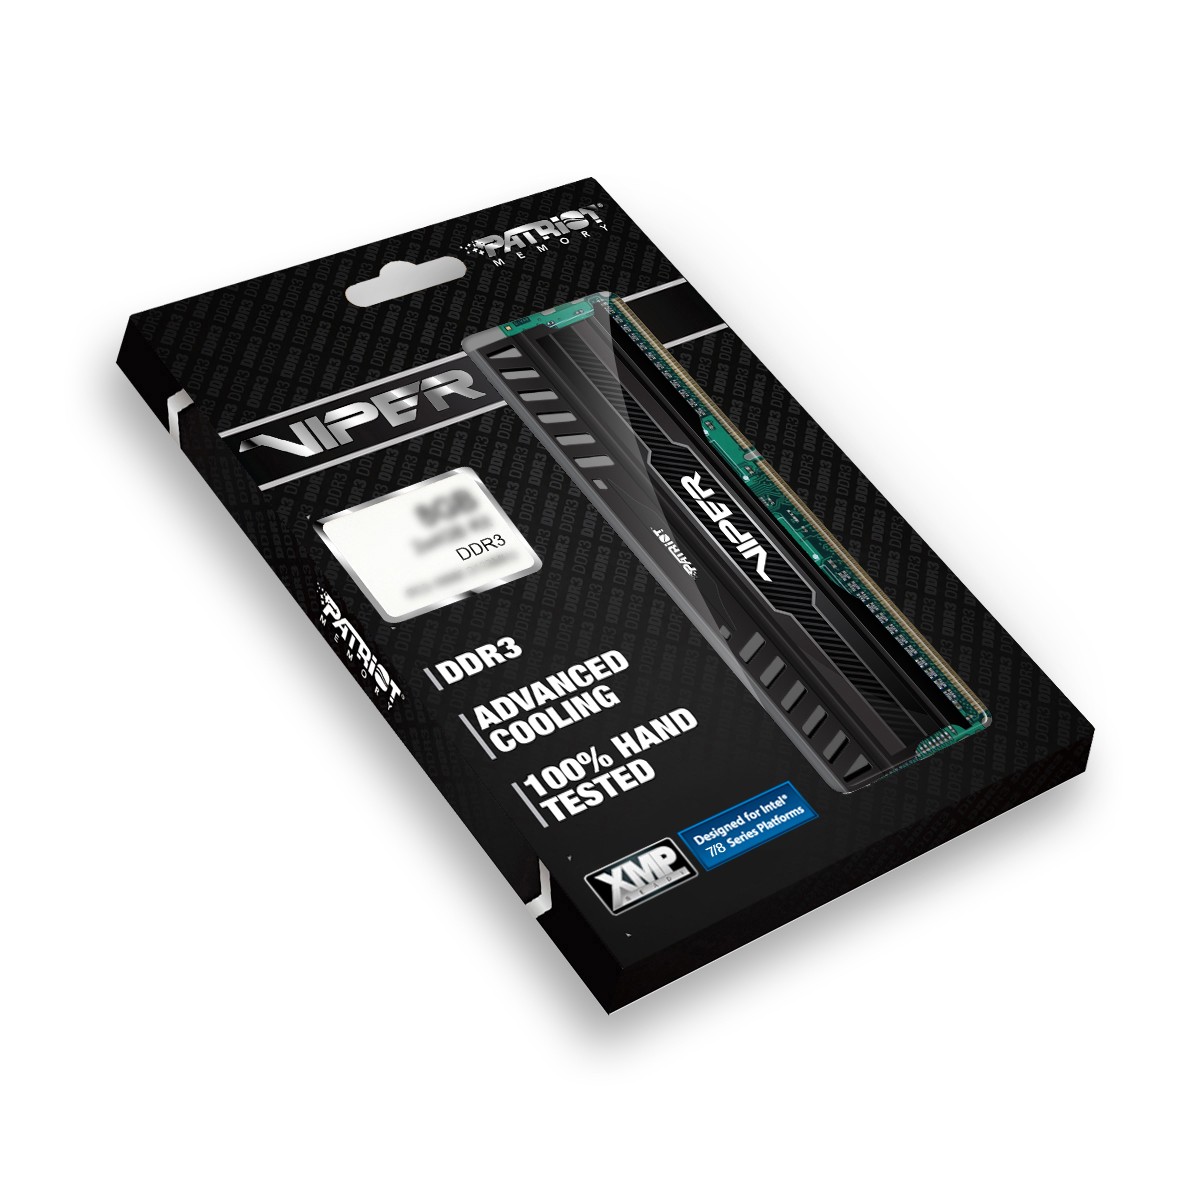 Memoria Viper 3 Black Mamba 16GB (4 x 4GB) DDR3 1600MHz Quad Channel Memory Kit PV316G160C9QK - Patriot